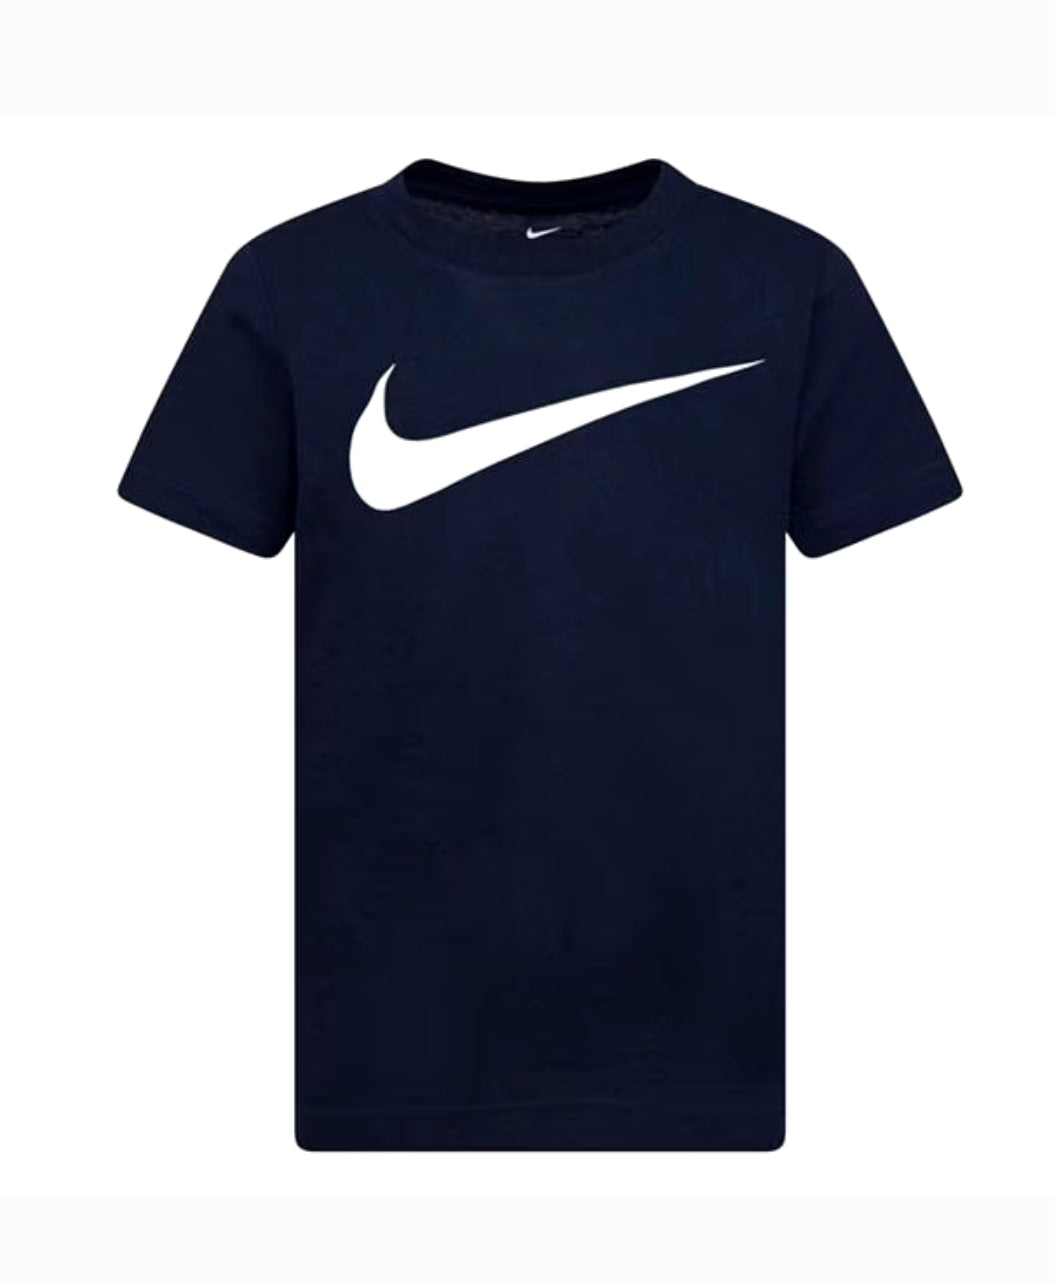 Nike swoosh logo t-shirt 